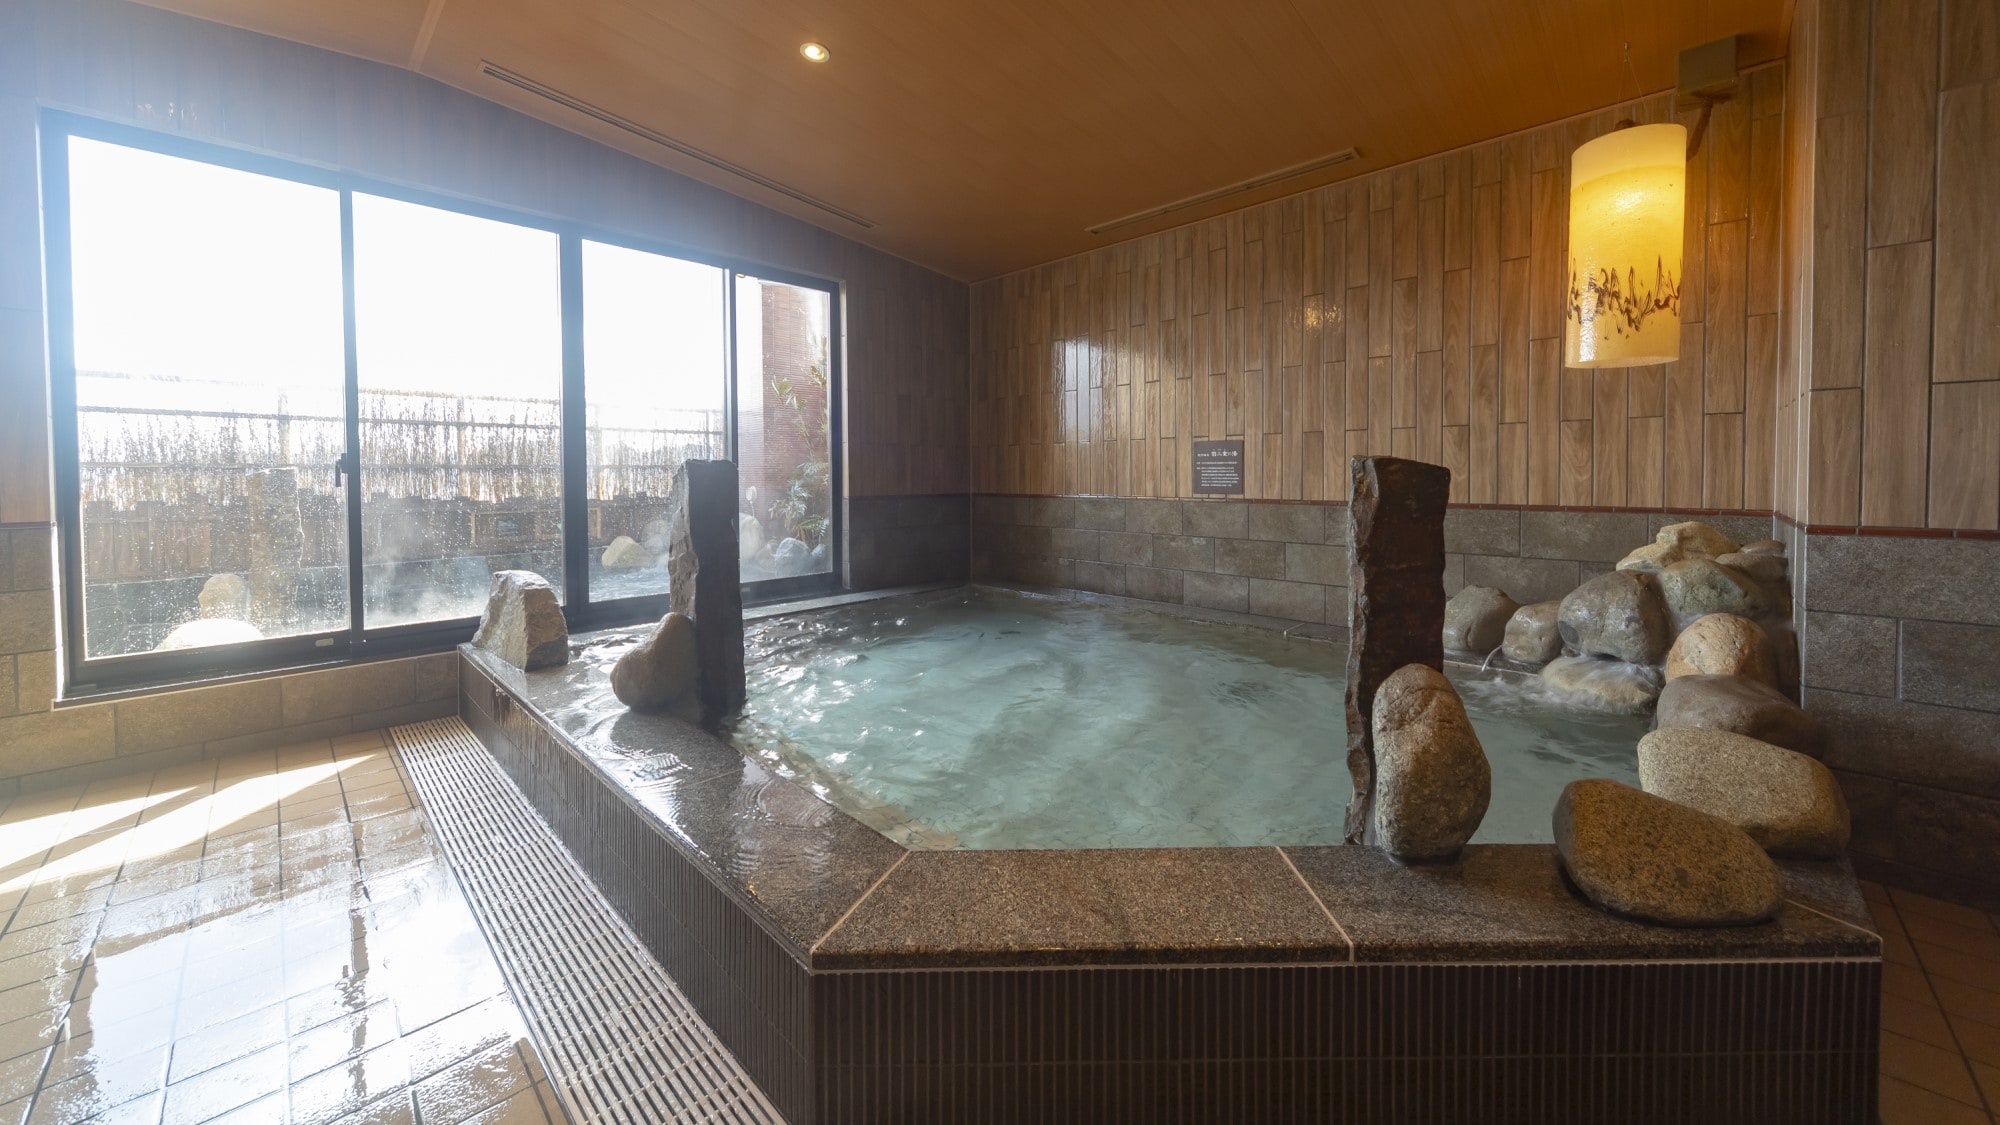 ■ Women's public bath indoor bath 40-42 ℃